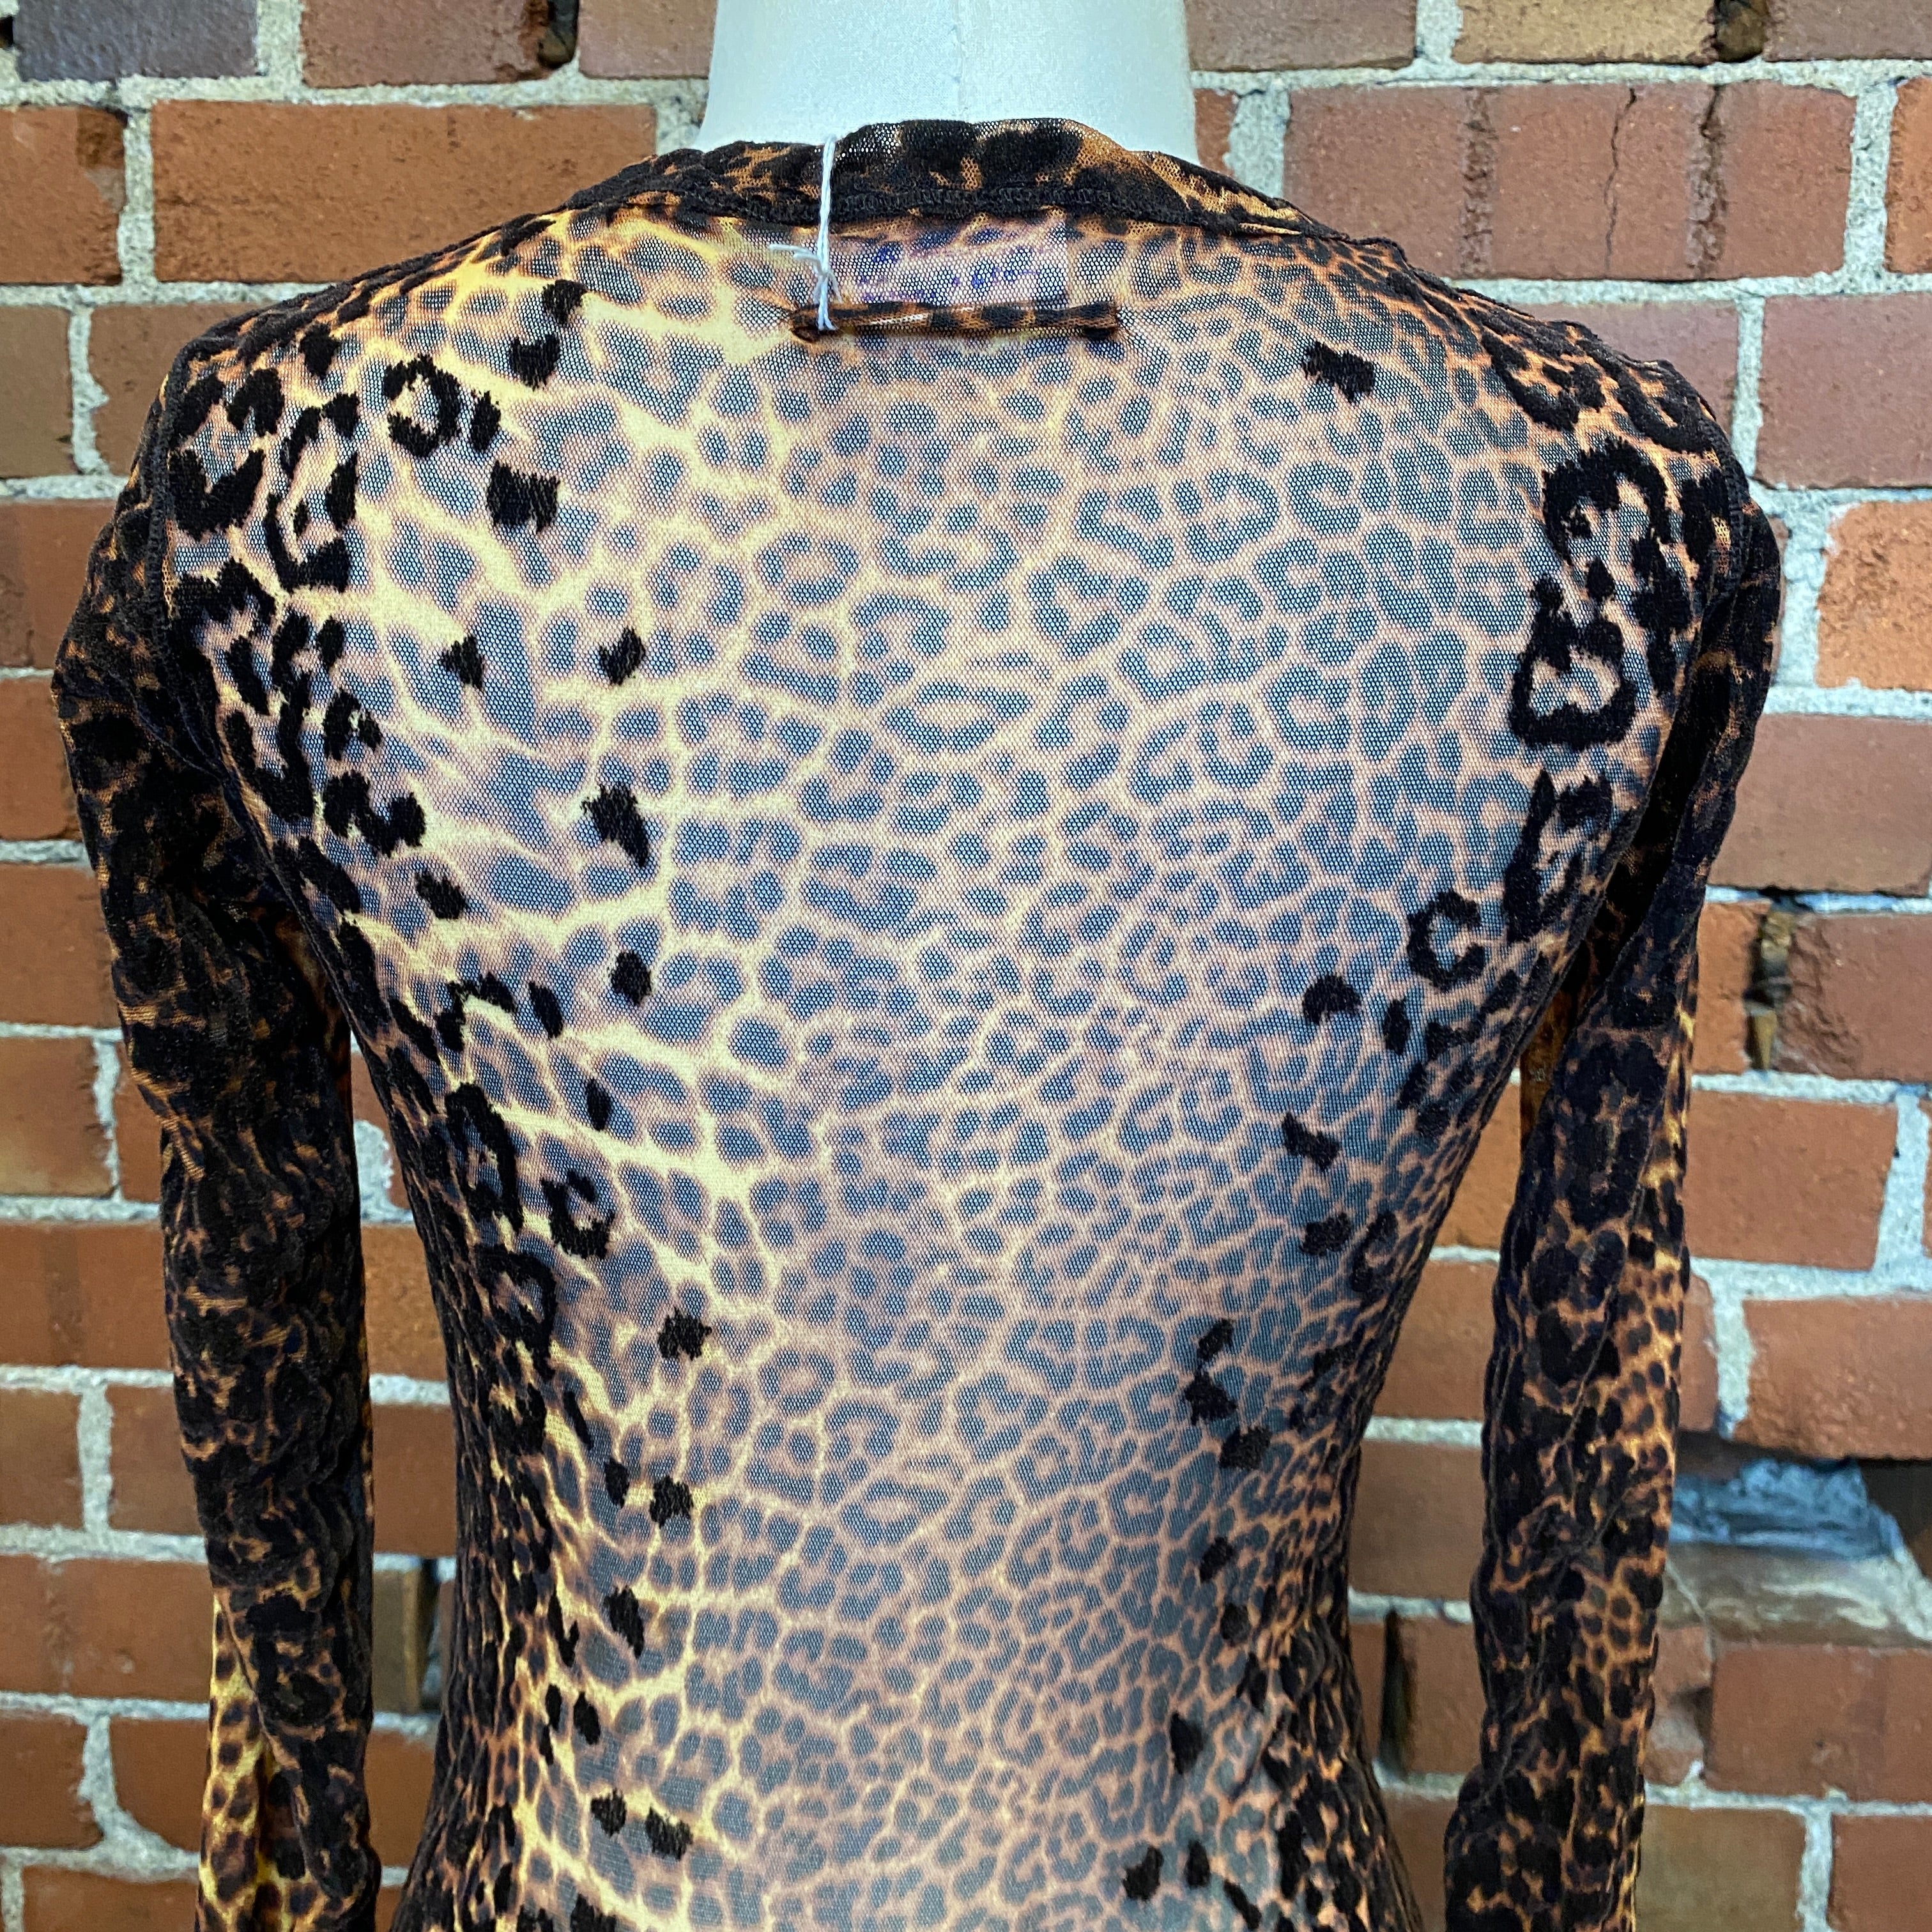 JEAN PAUL GAULTIER rare velvet leopard mesh top